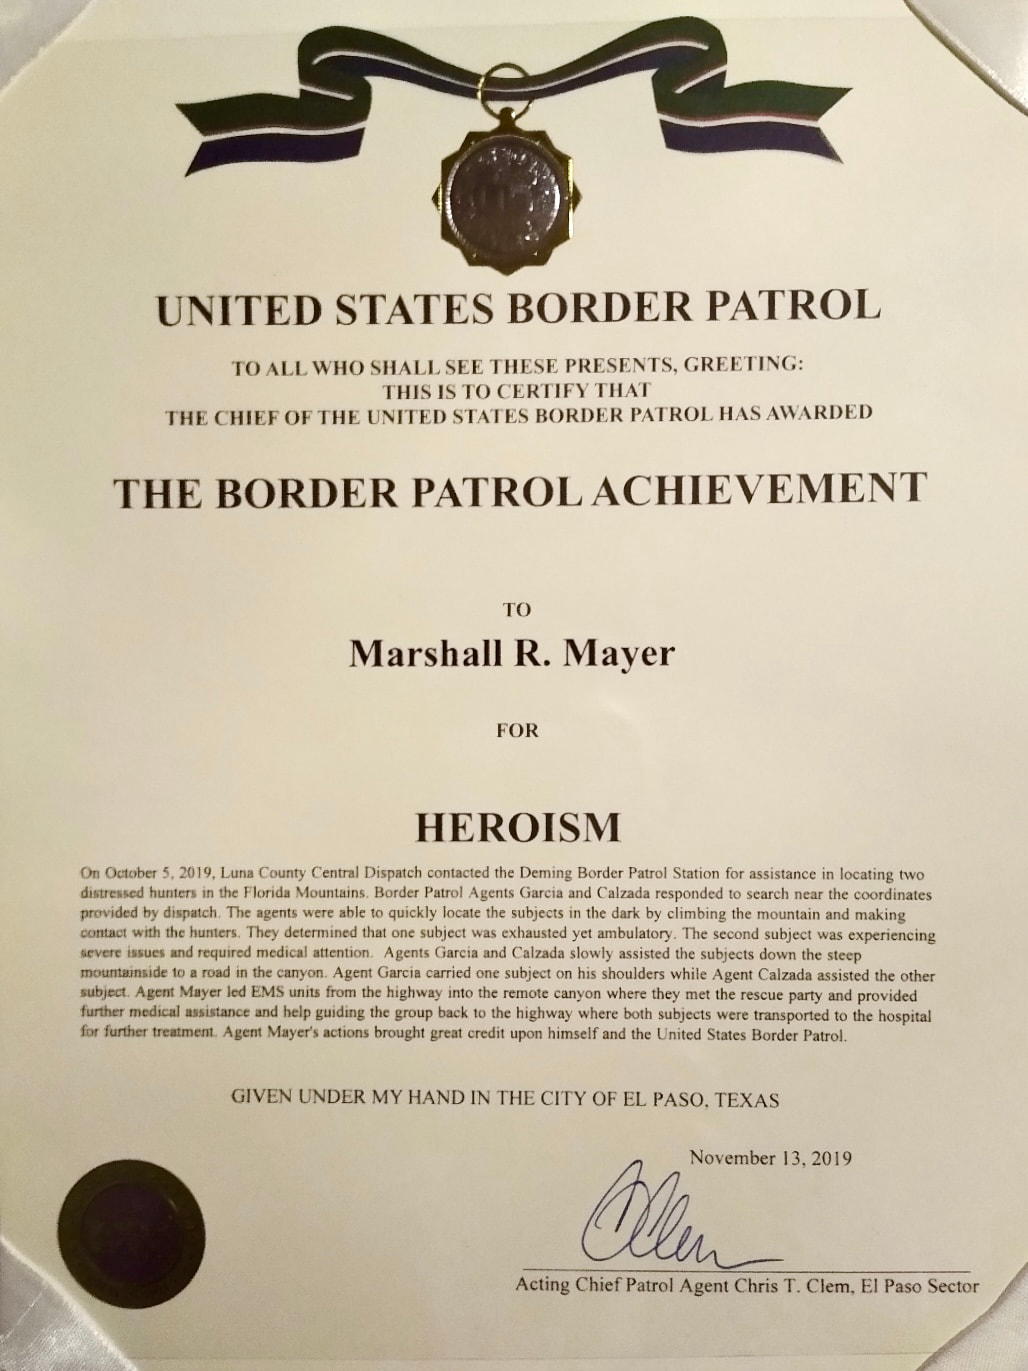 USBP Achievement Medal certificate for Marshal Mayer